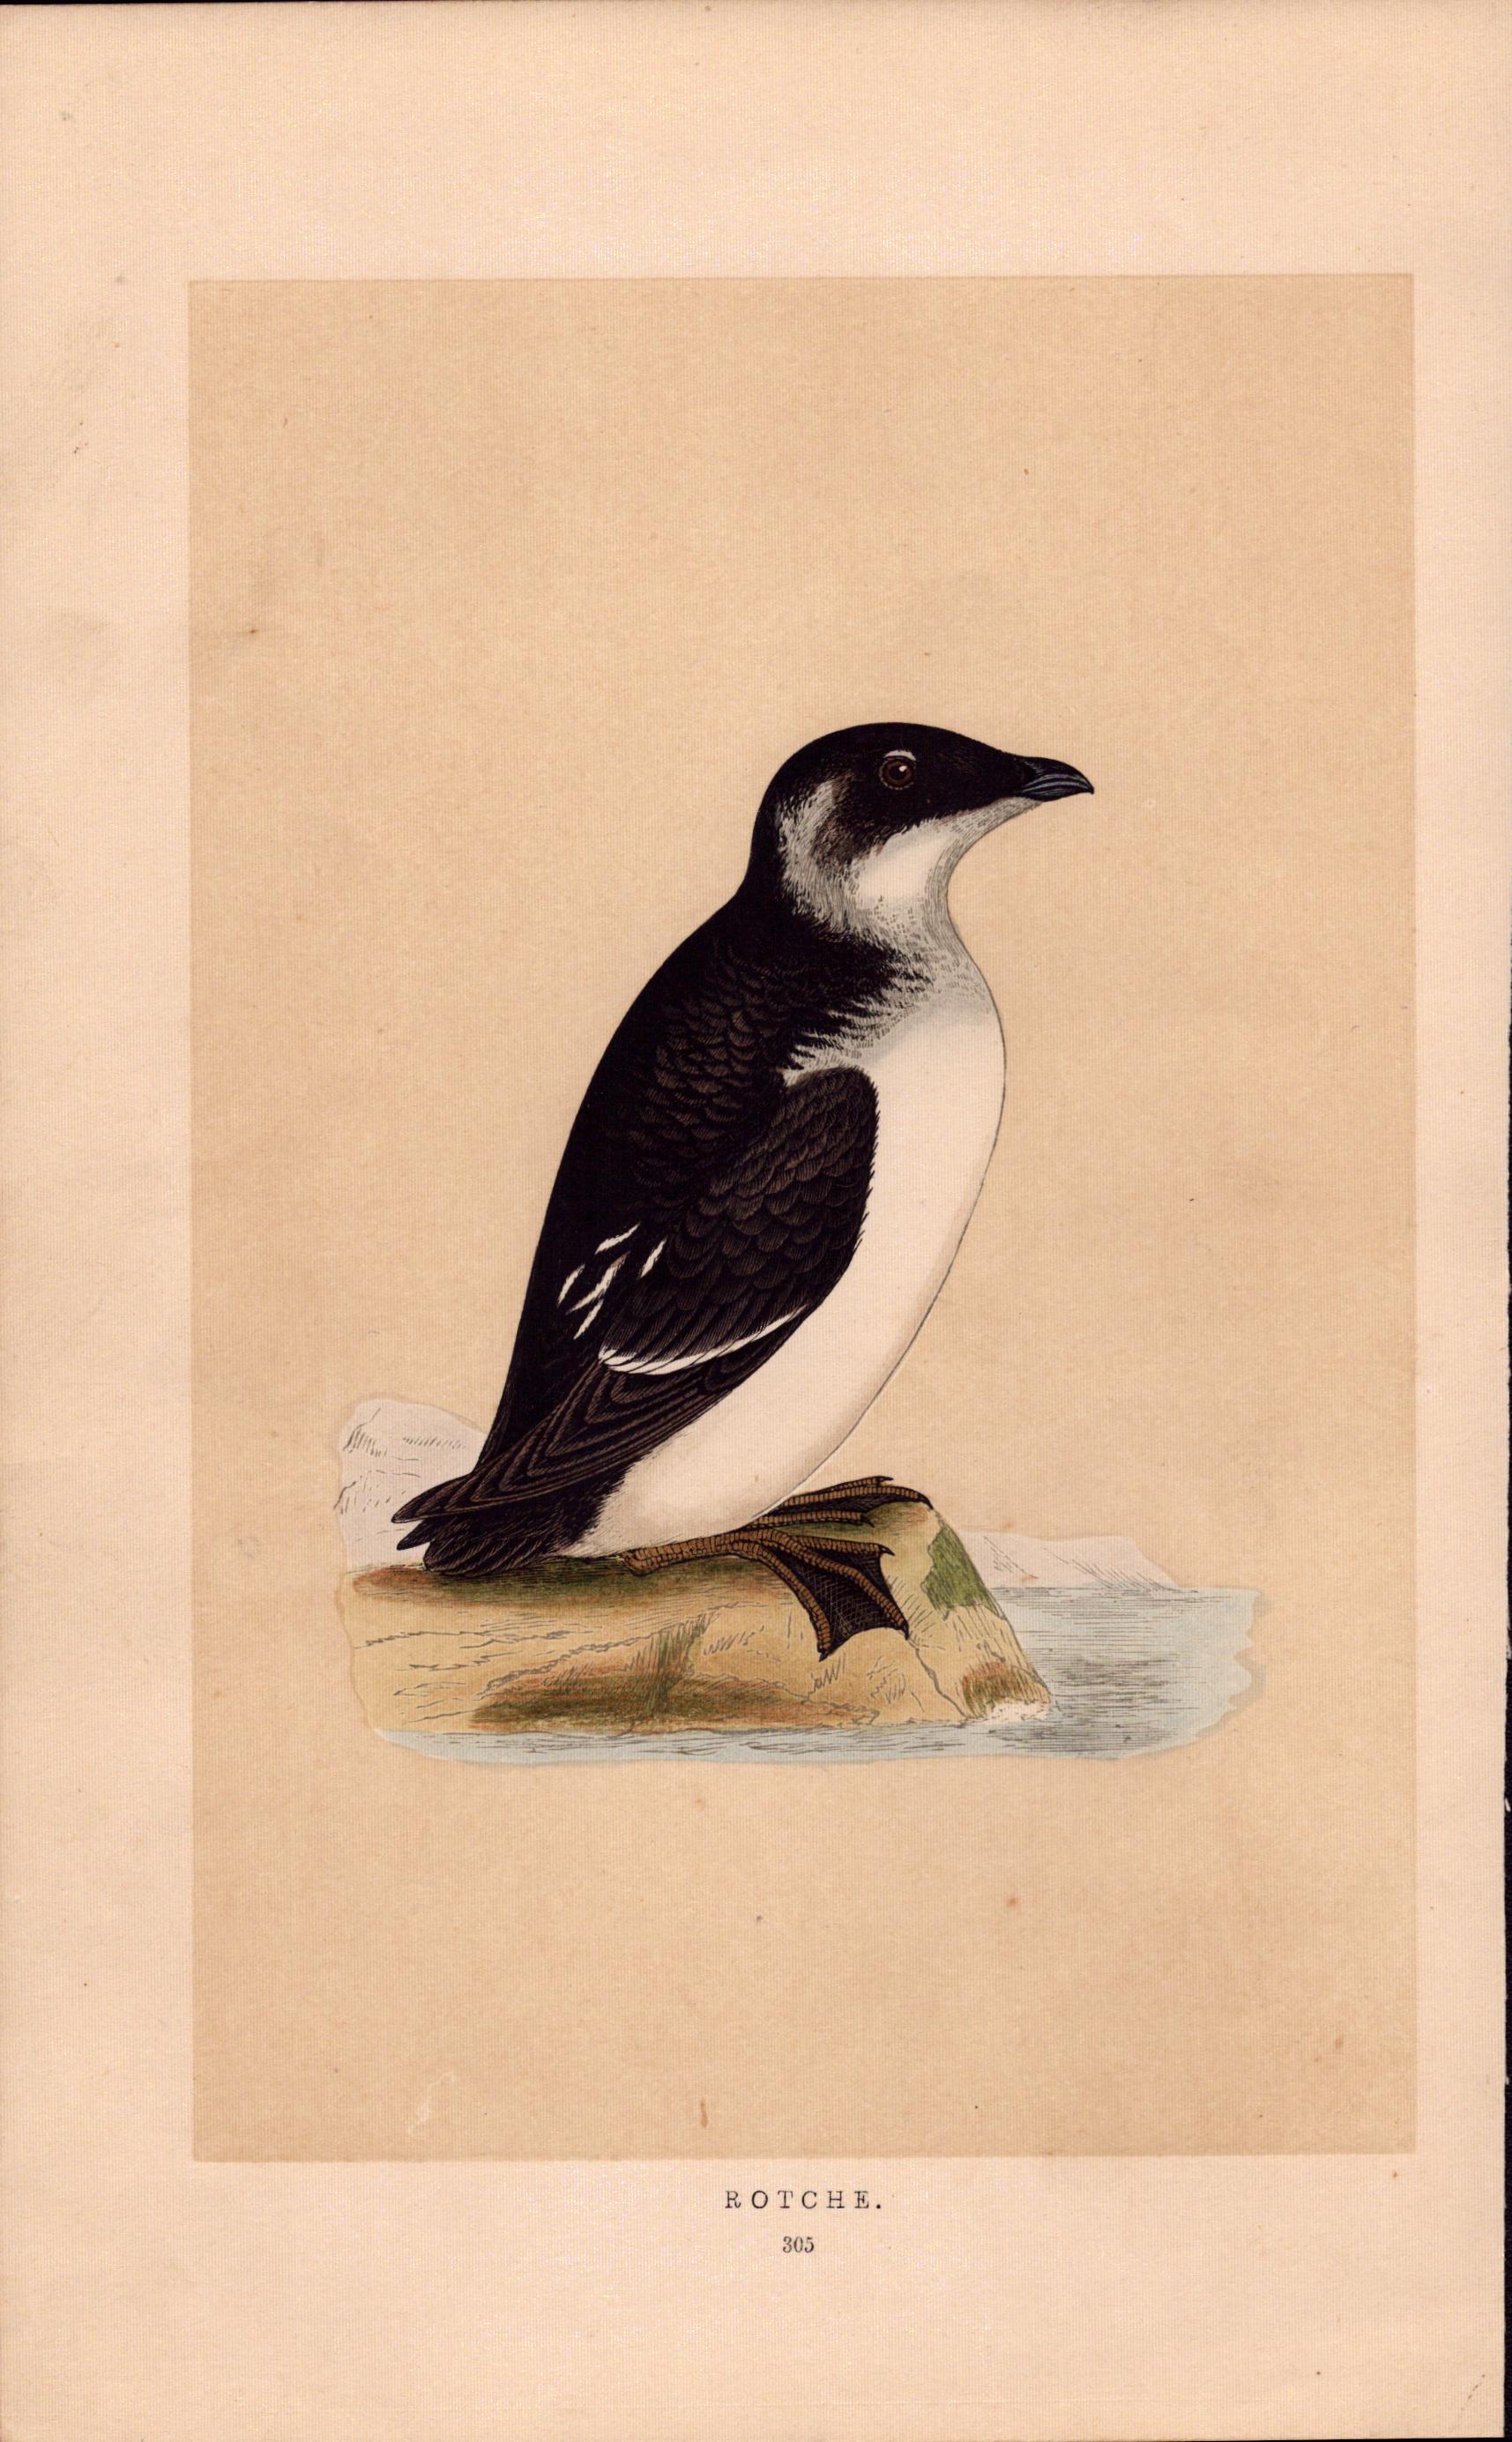 Rotche Rev Morris Antique 1857 History of British Birds Engraving.